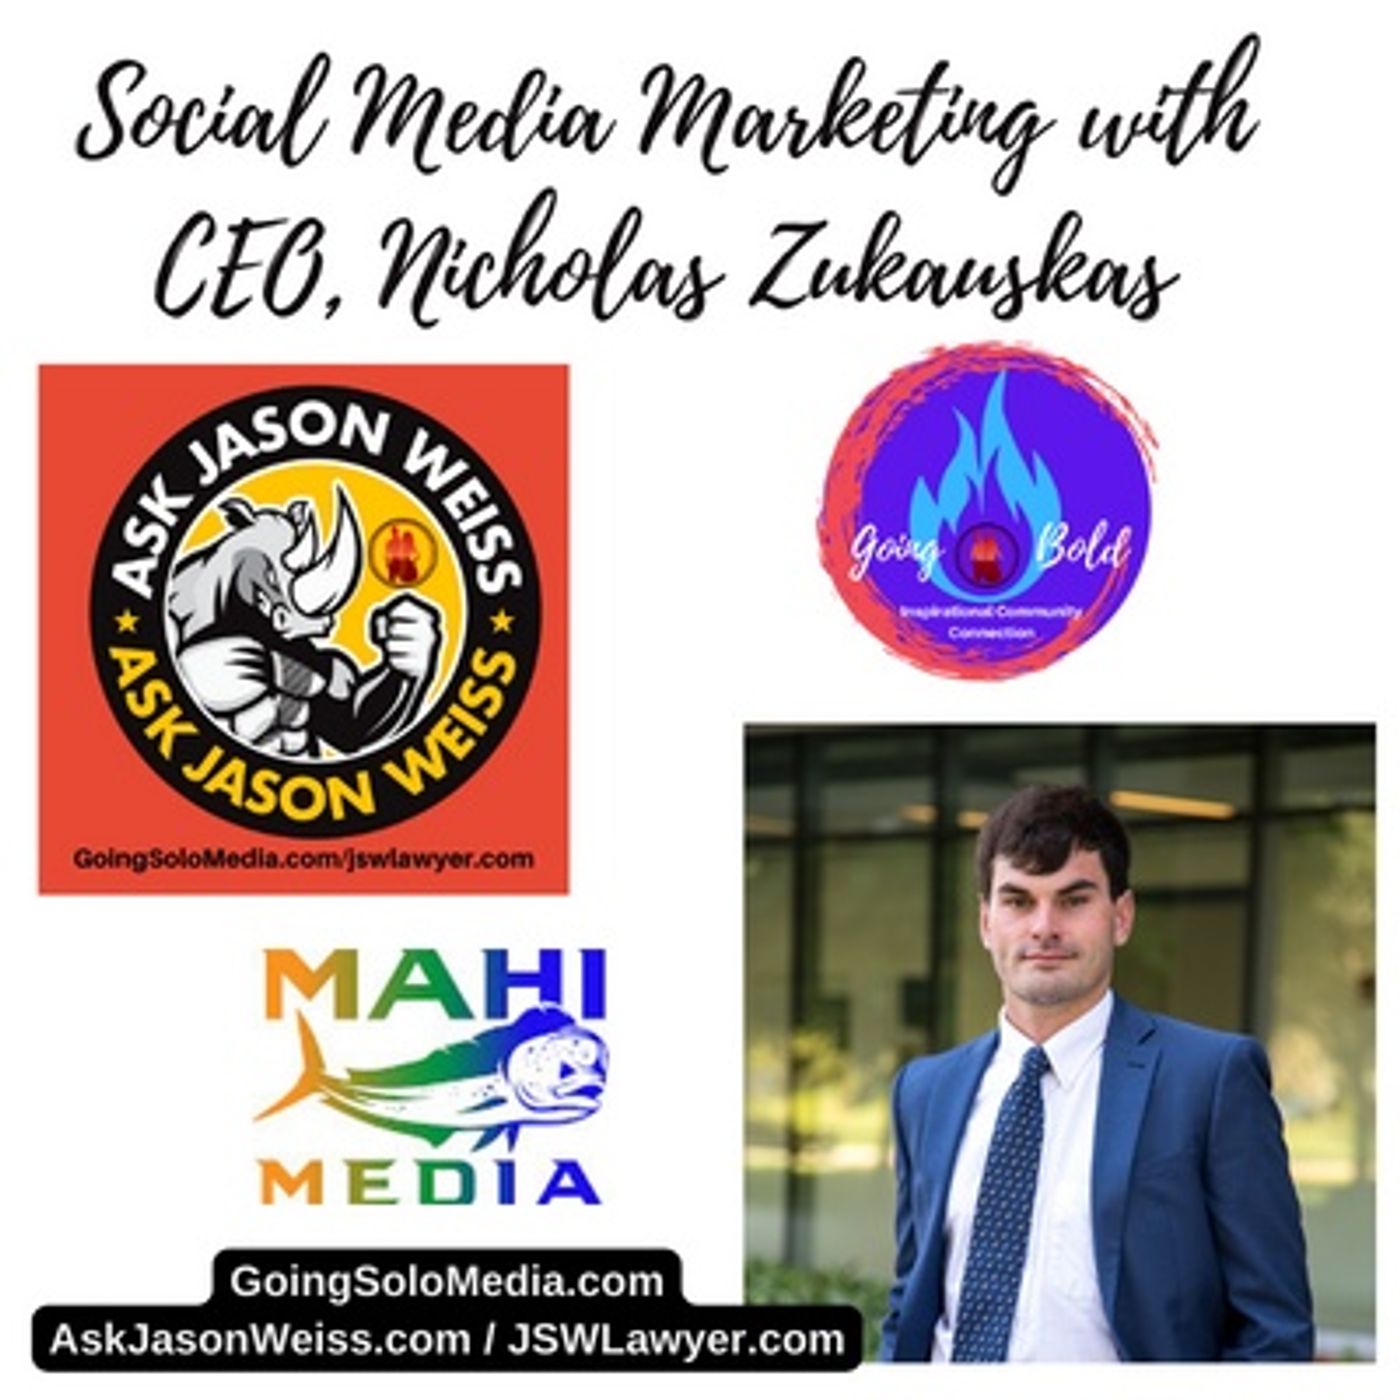 Social Media Marketing with CEO, Nicholas Zukauska